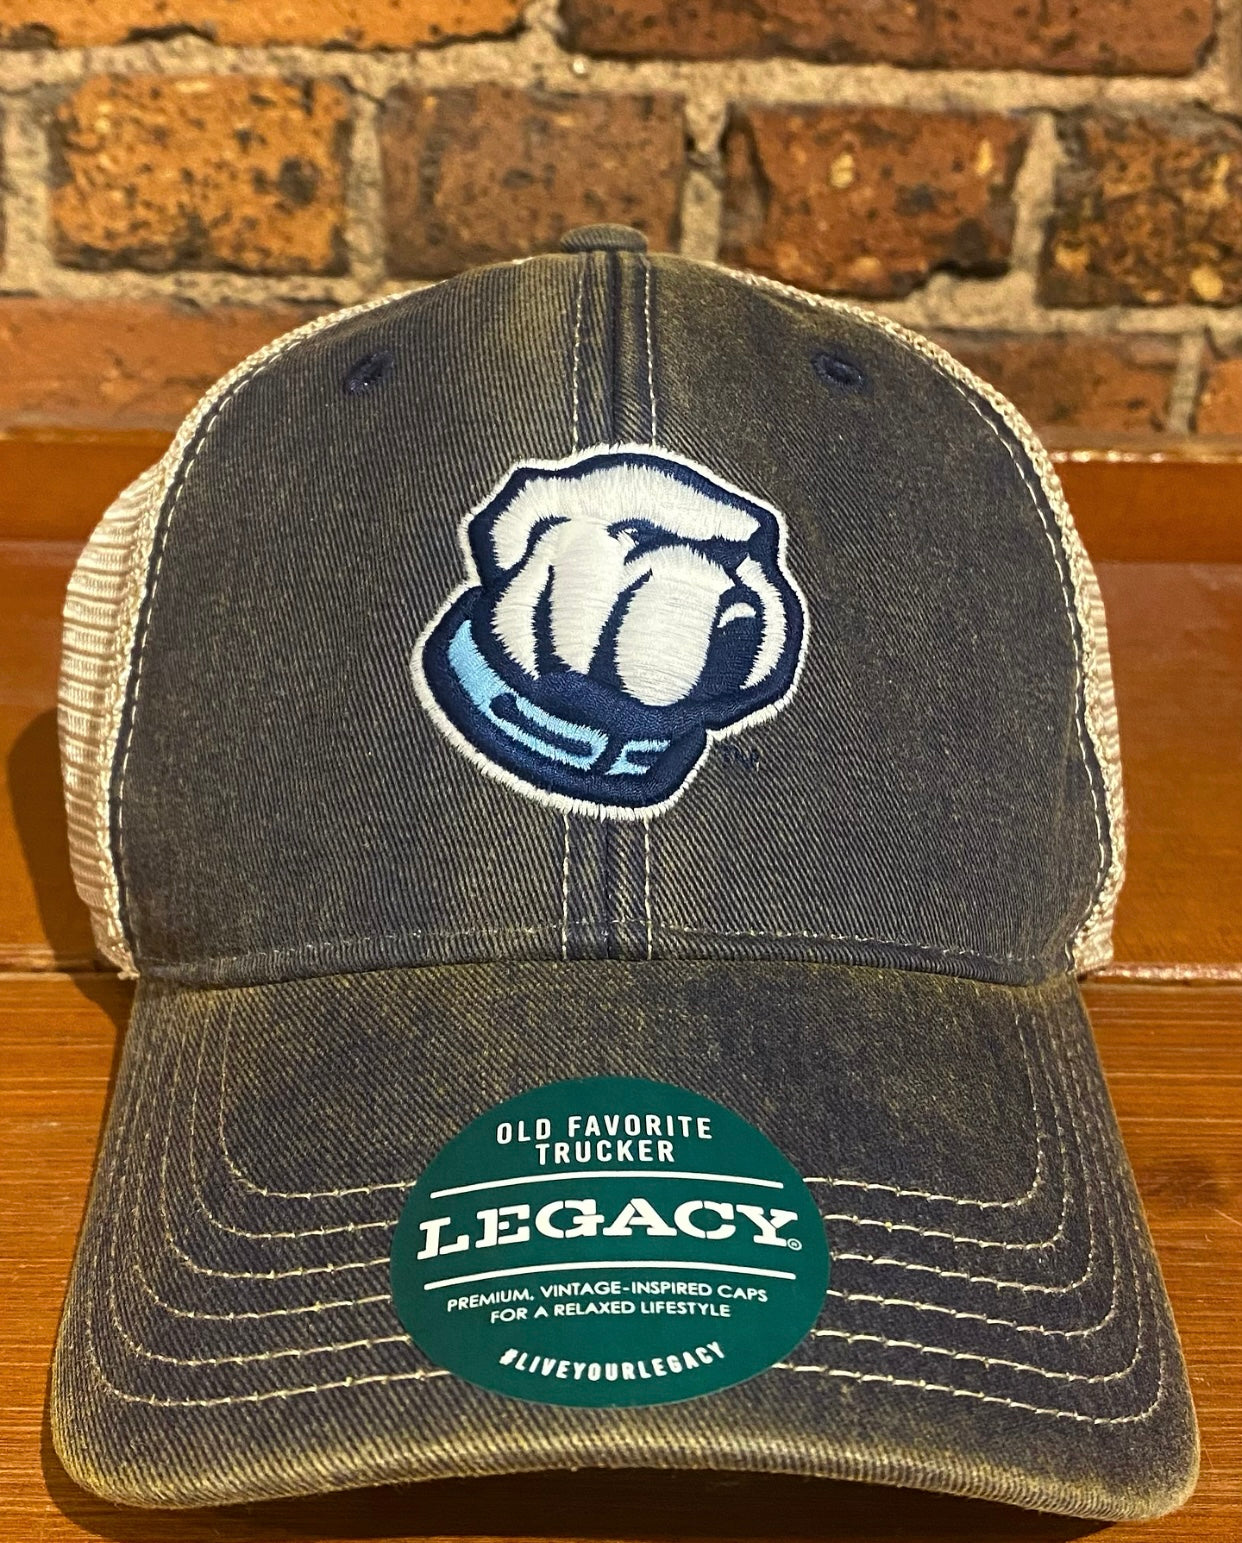 Citadel Trucker Hat - Legacy